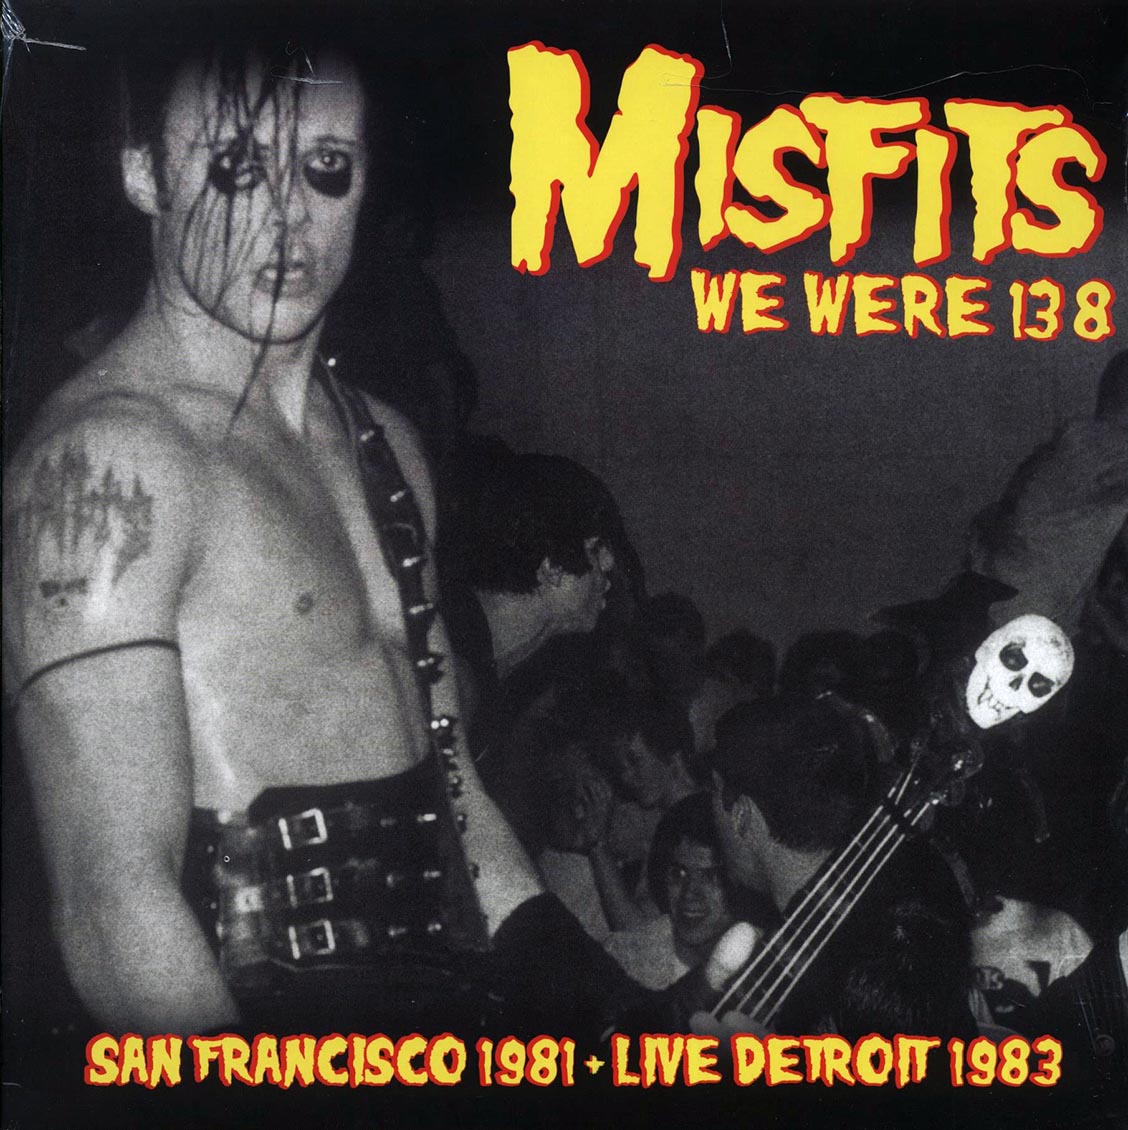 Misfits "We Were 138" LP